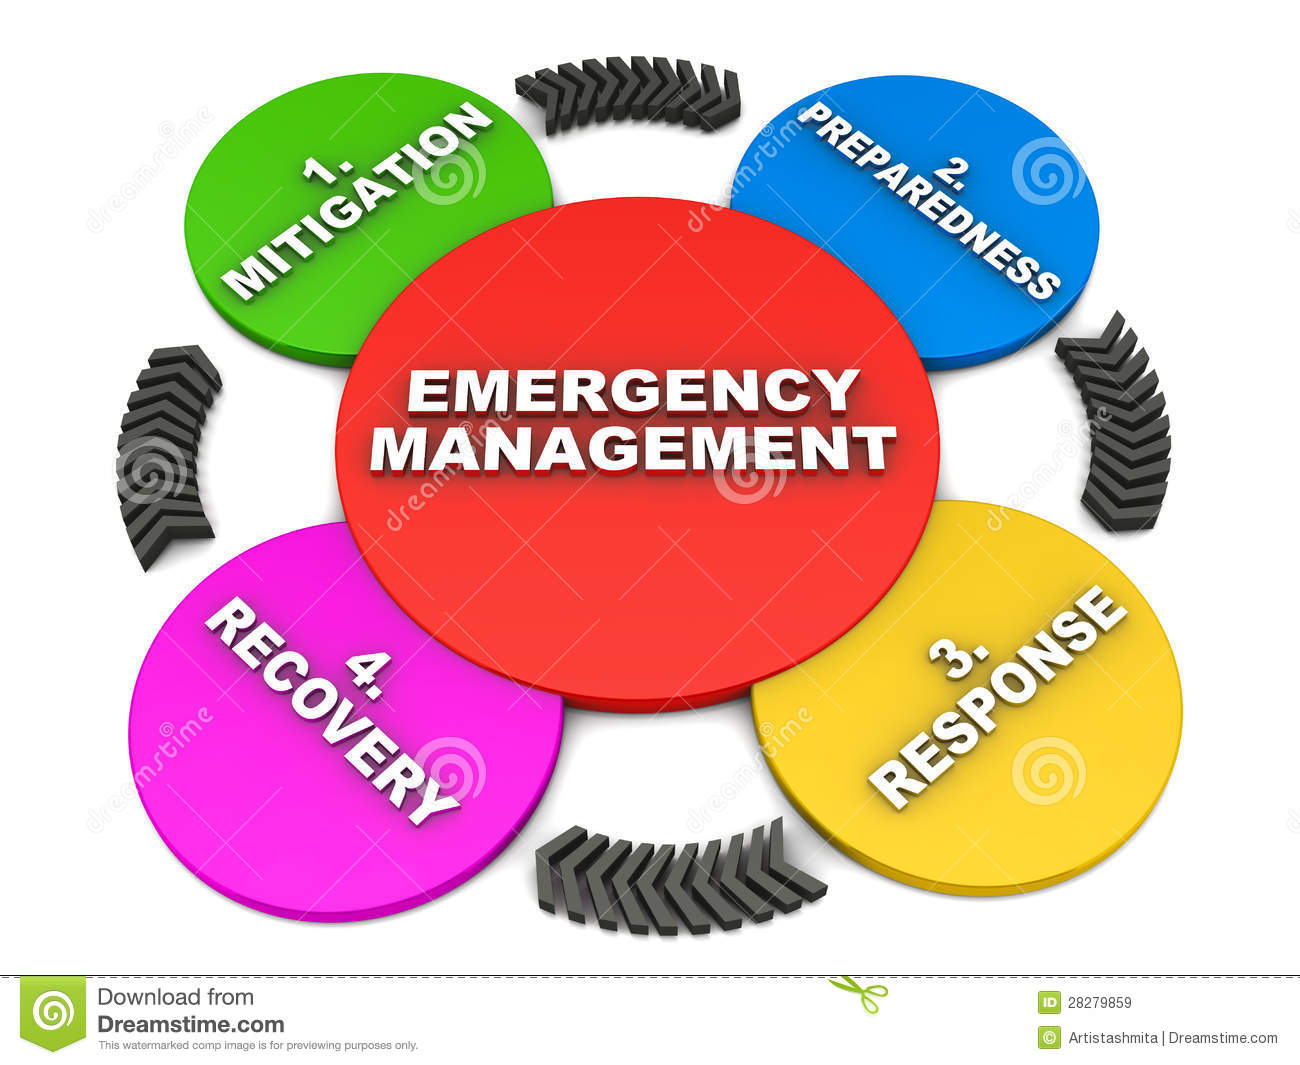 Emergency Planning and Management Course, Westlands, Nairobi, Kenya